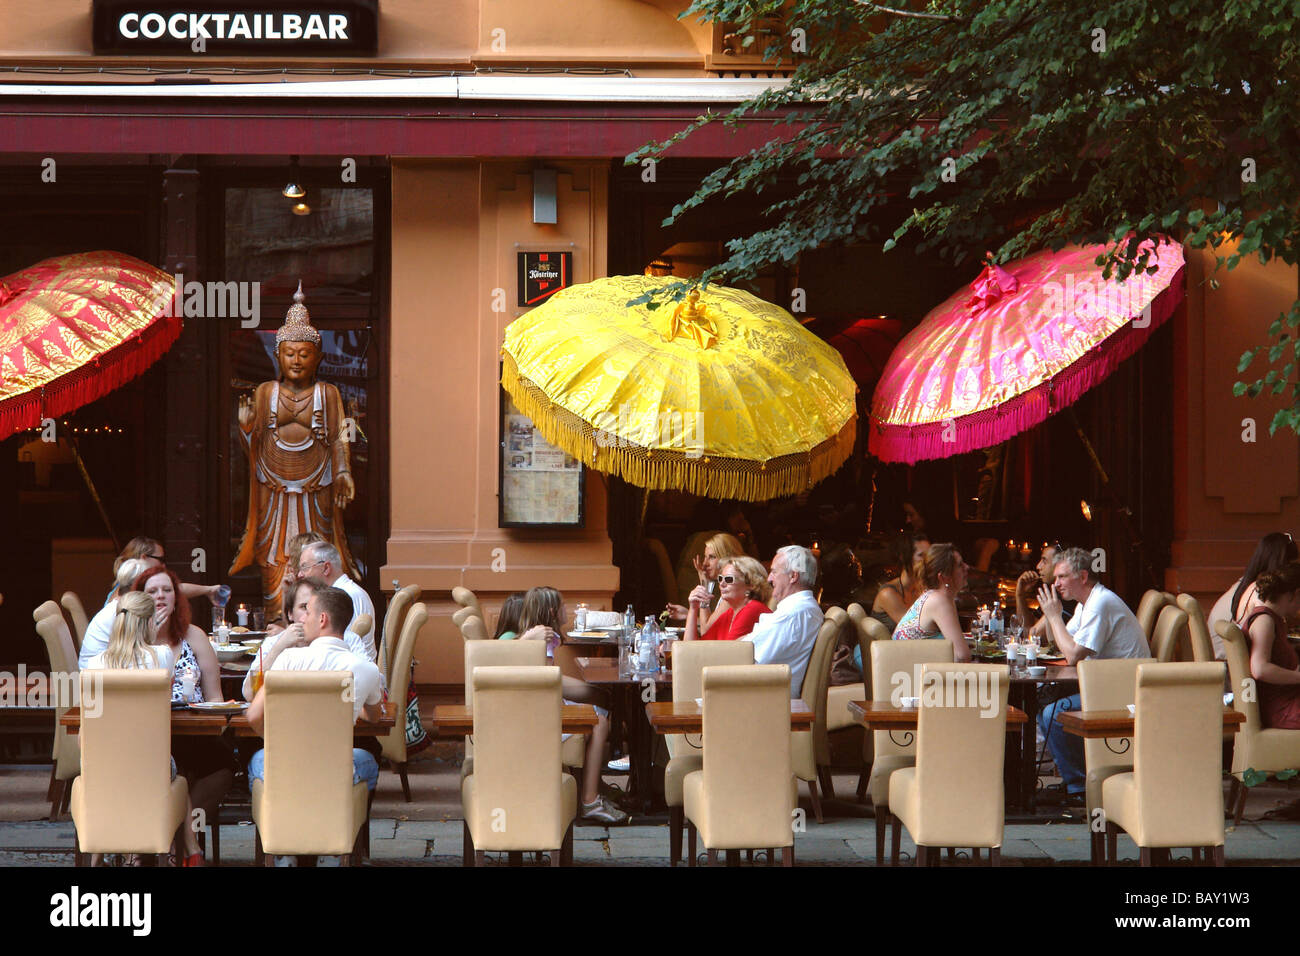 Cocktailbar in the Oranienburger Str., Berlin, Germany Stock Photo